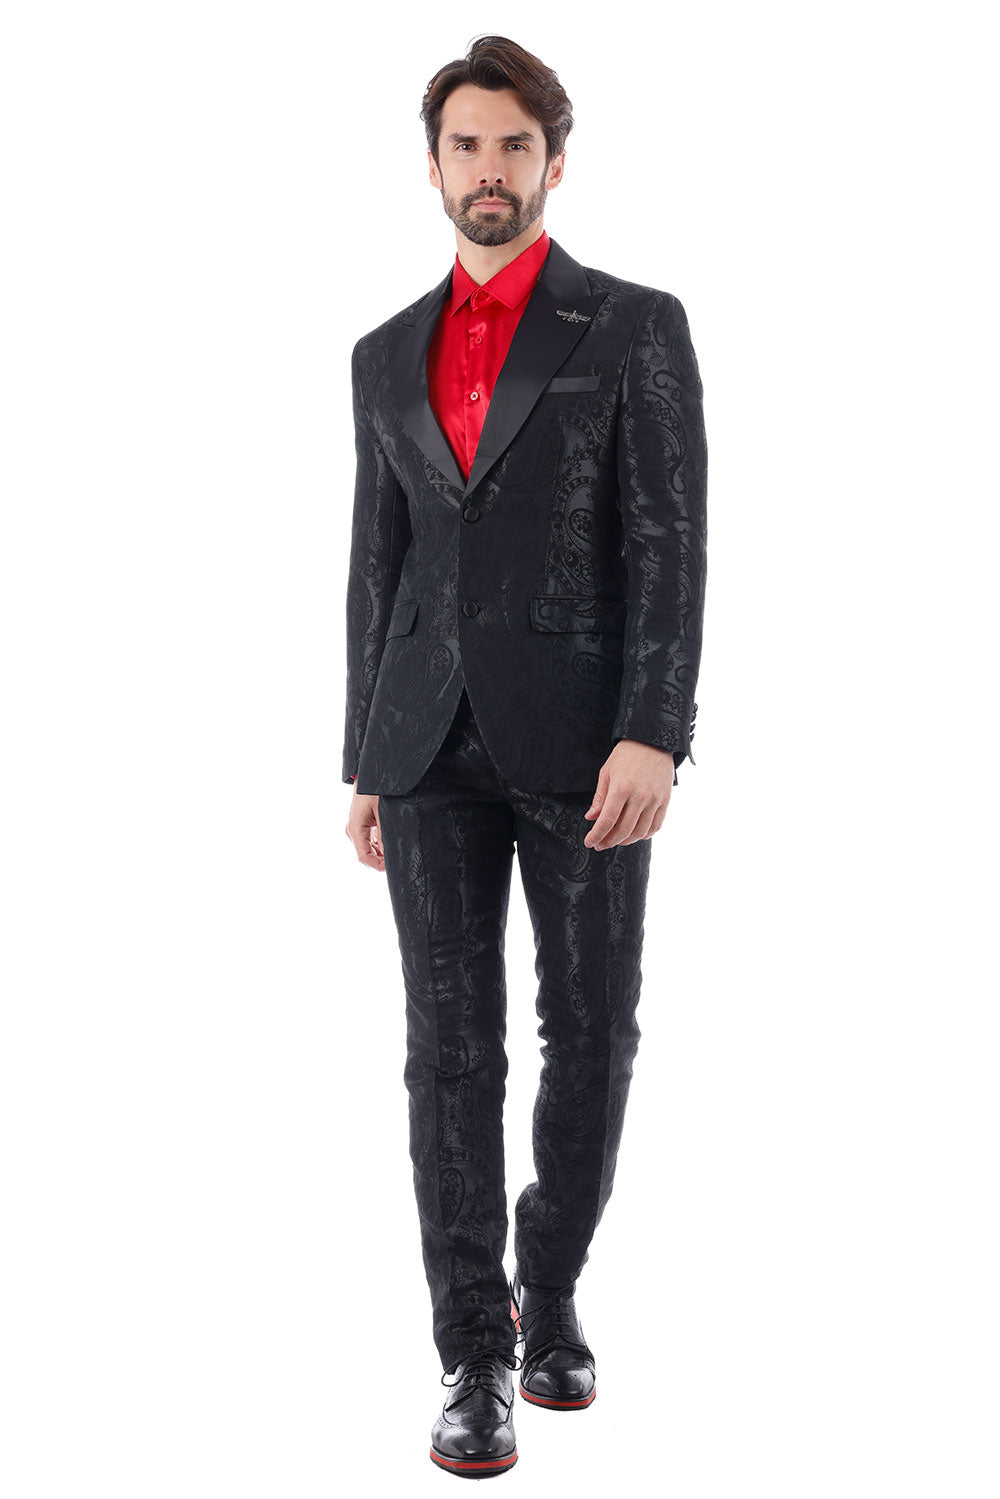 BARABAS Men's Paisley Pattern Peak Lapel Formal Suit 4SU08 Black